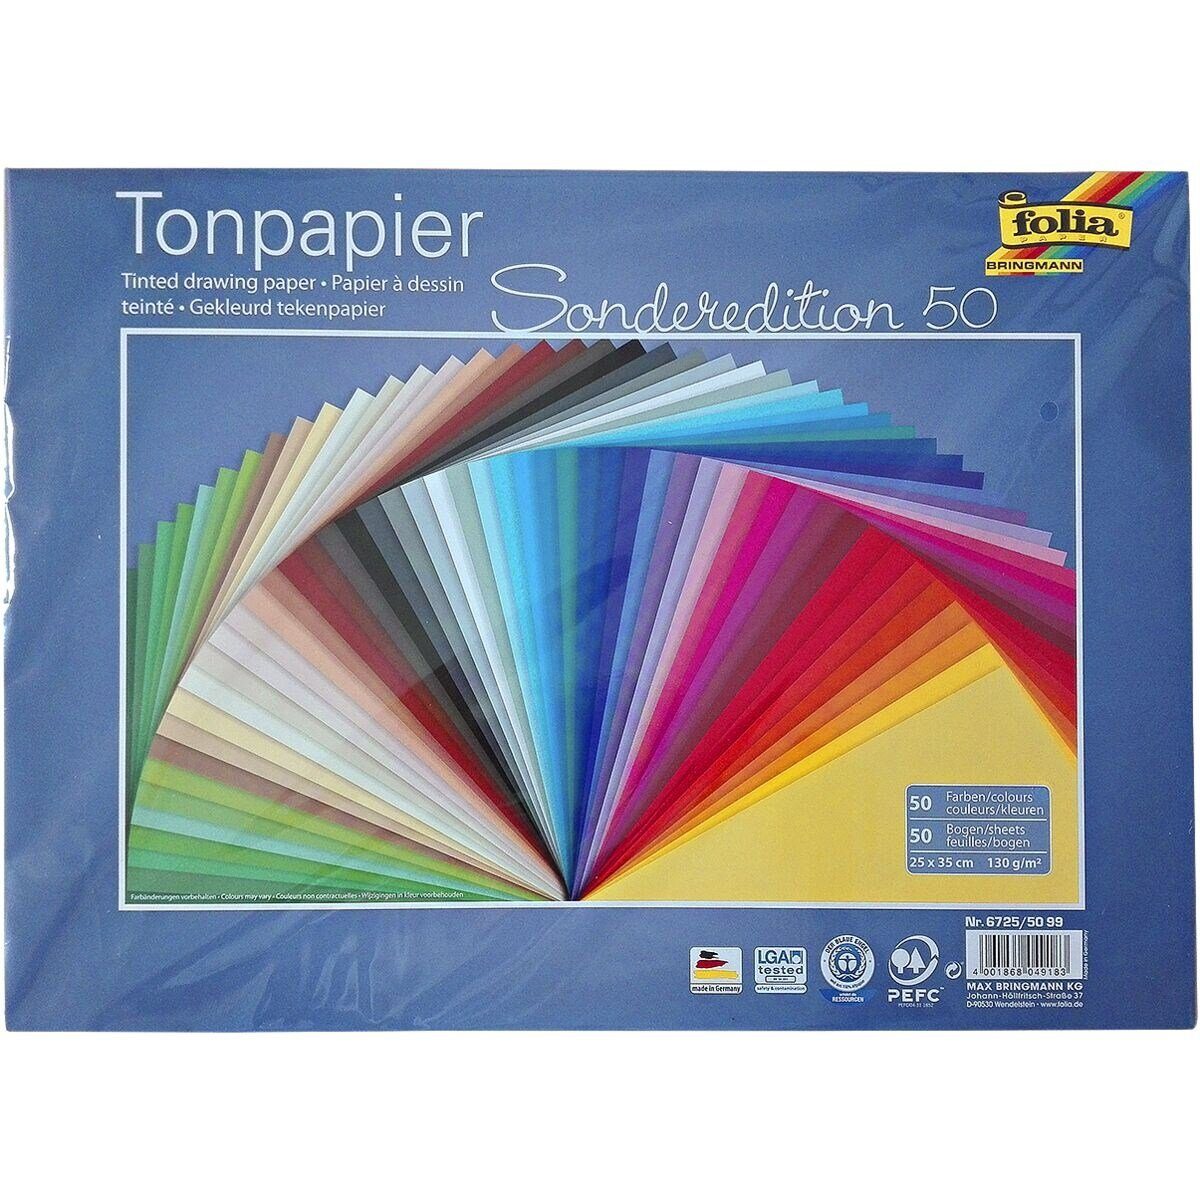 Folia Bastelkartonpapier 50 Blatt Tonpapier g/m², 50 Sonderedition Format 50, in 130 Farben, 25x35 cm,